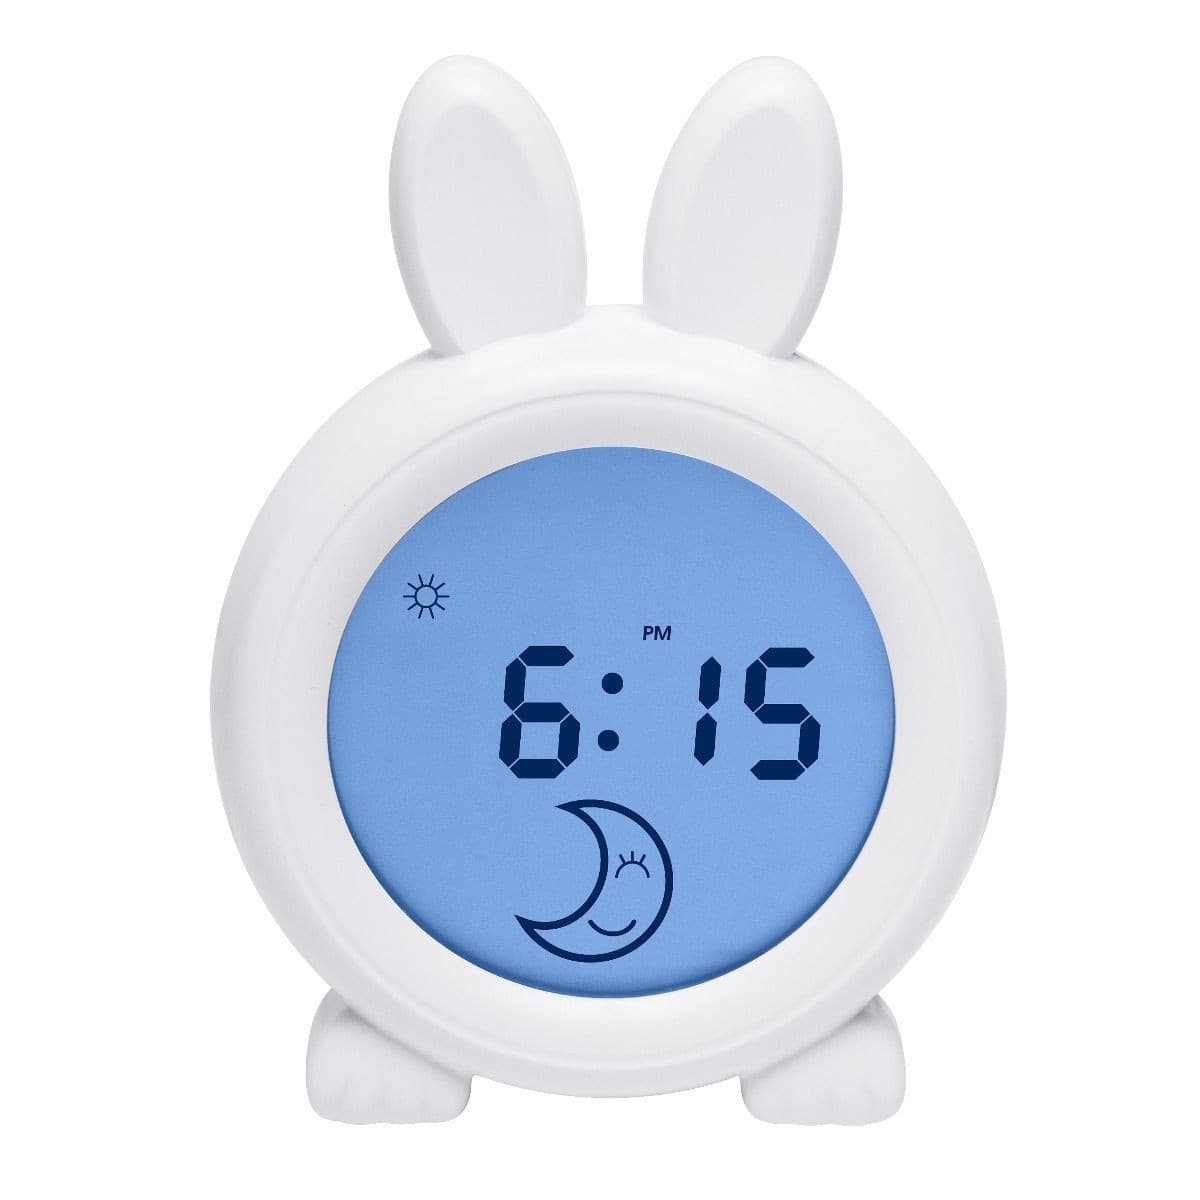 Oricom Sleep Trainer Digital Bunny Clock.